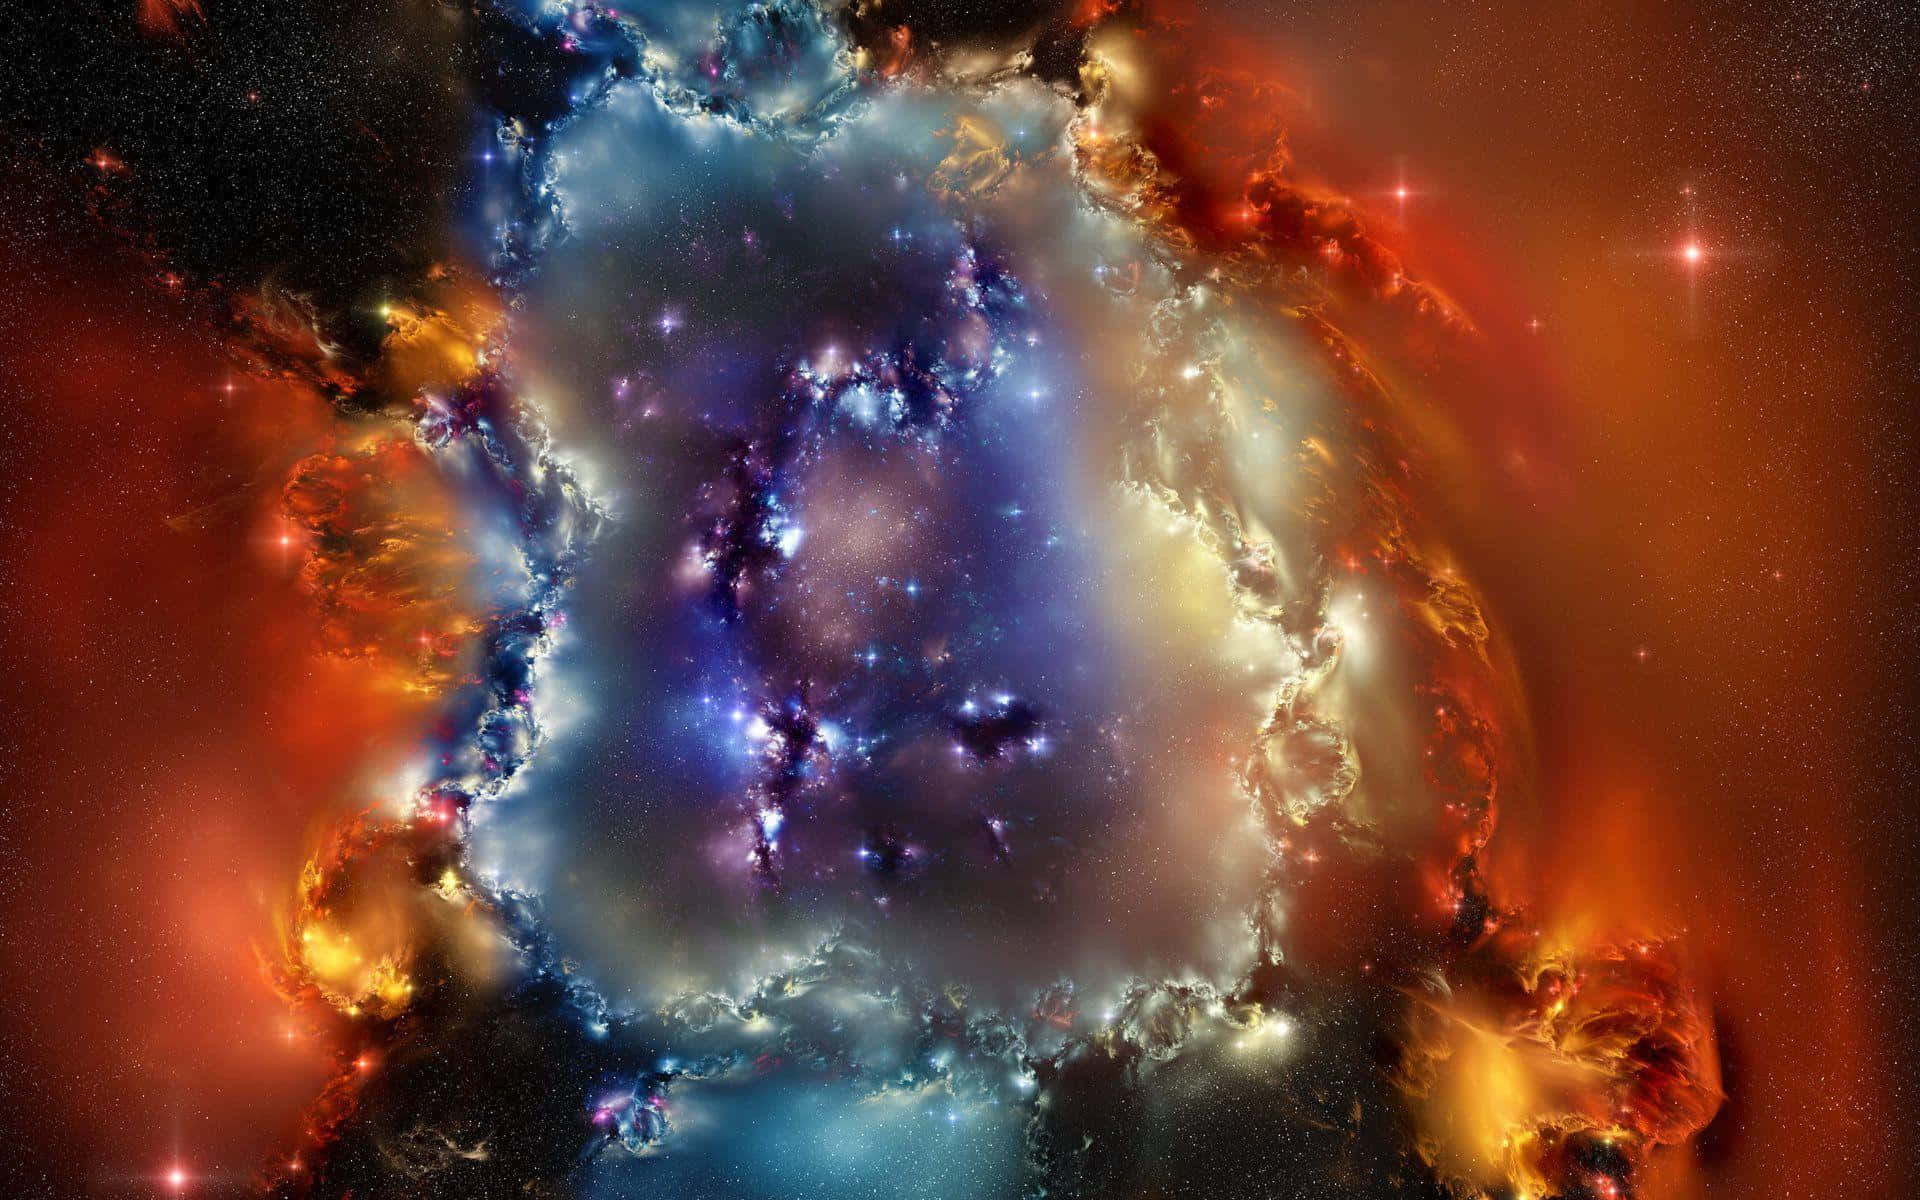 Caption: Mesmerizing Planetary Nebula in Deep Space Wallpaper